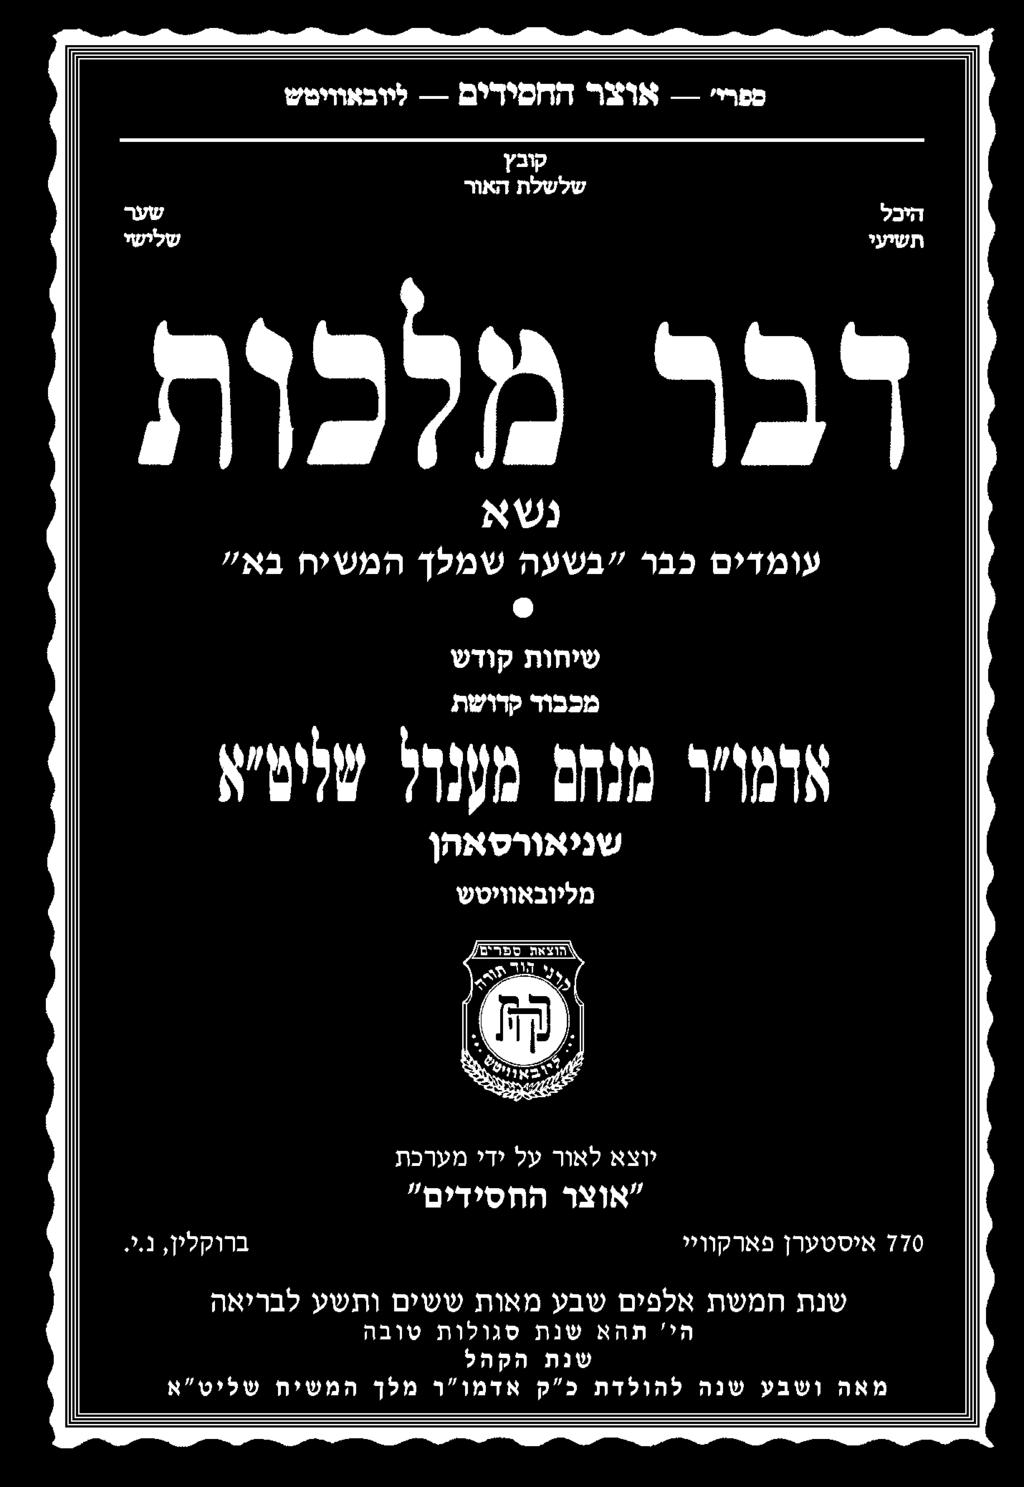 IN LOVING MEMORY OF OUR DEAR MOTHER Mrs. Preciada Bada bat Reb Shimon Eliyahu v"g Assayag Passed away on 2 Kislev, 5771 /v /c /m /b /, * DEDICATED BY HER CHILDREN Rabbi & Mrs.